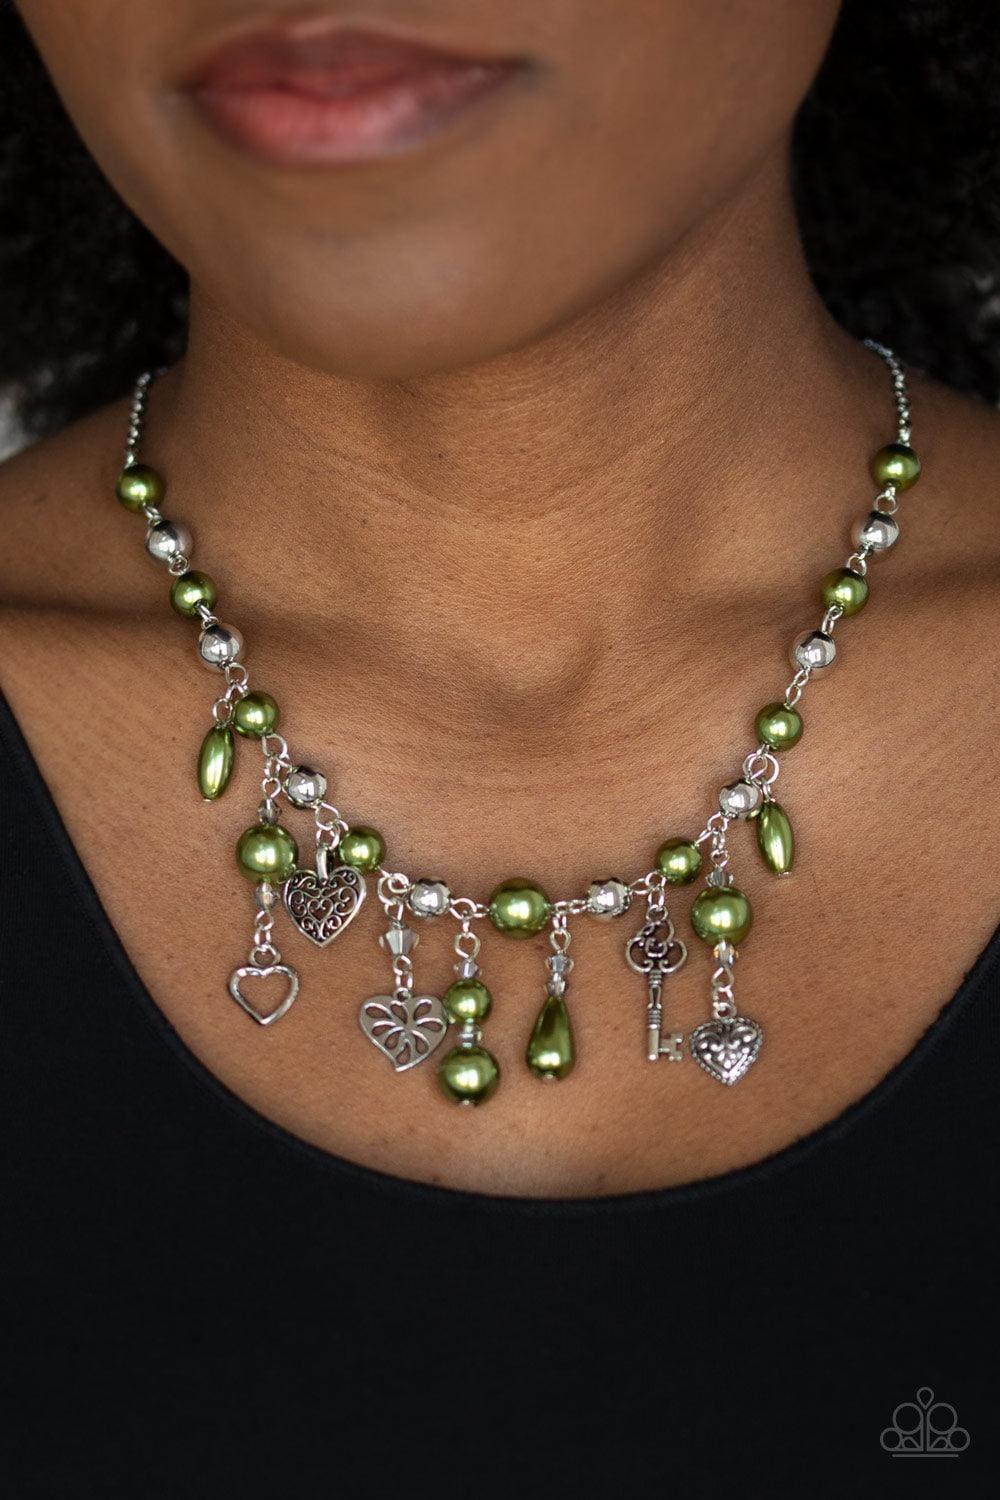 Paparazzi Accessories - Renaissance Romance - Green Necklace - Bling by JessieK